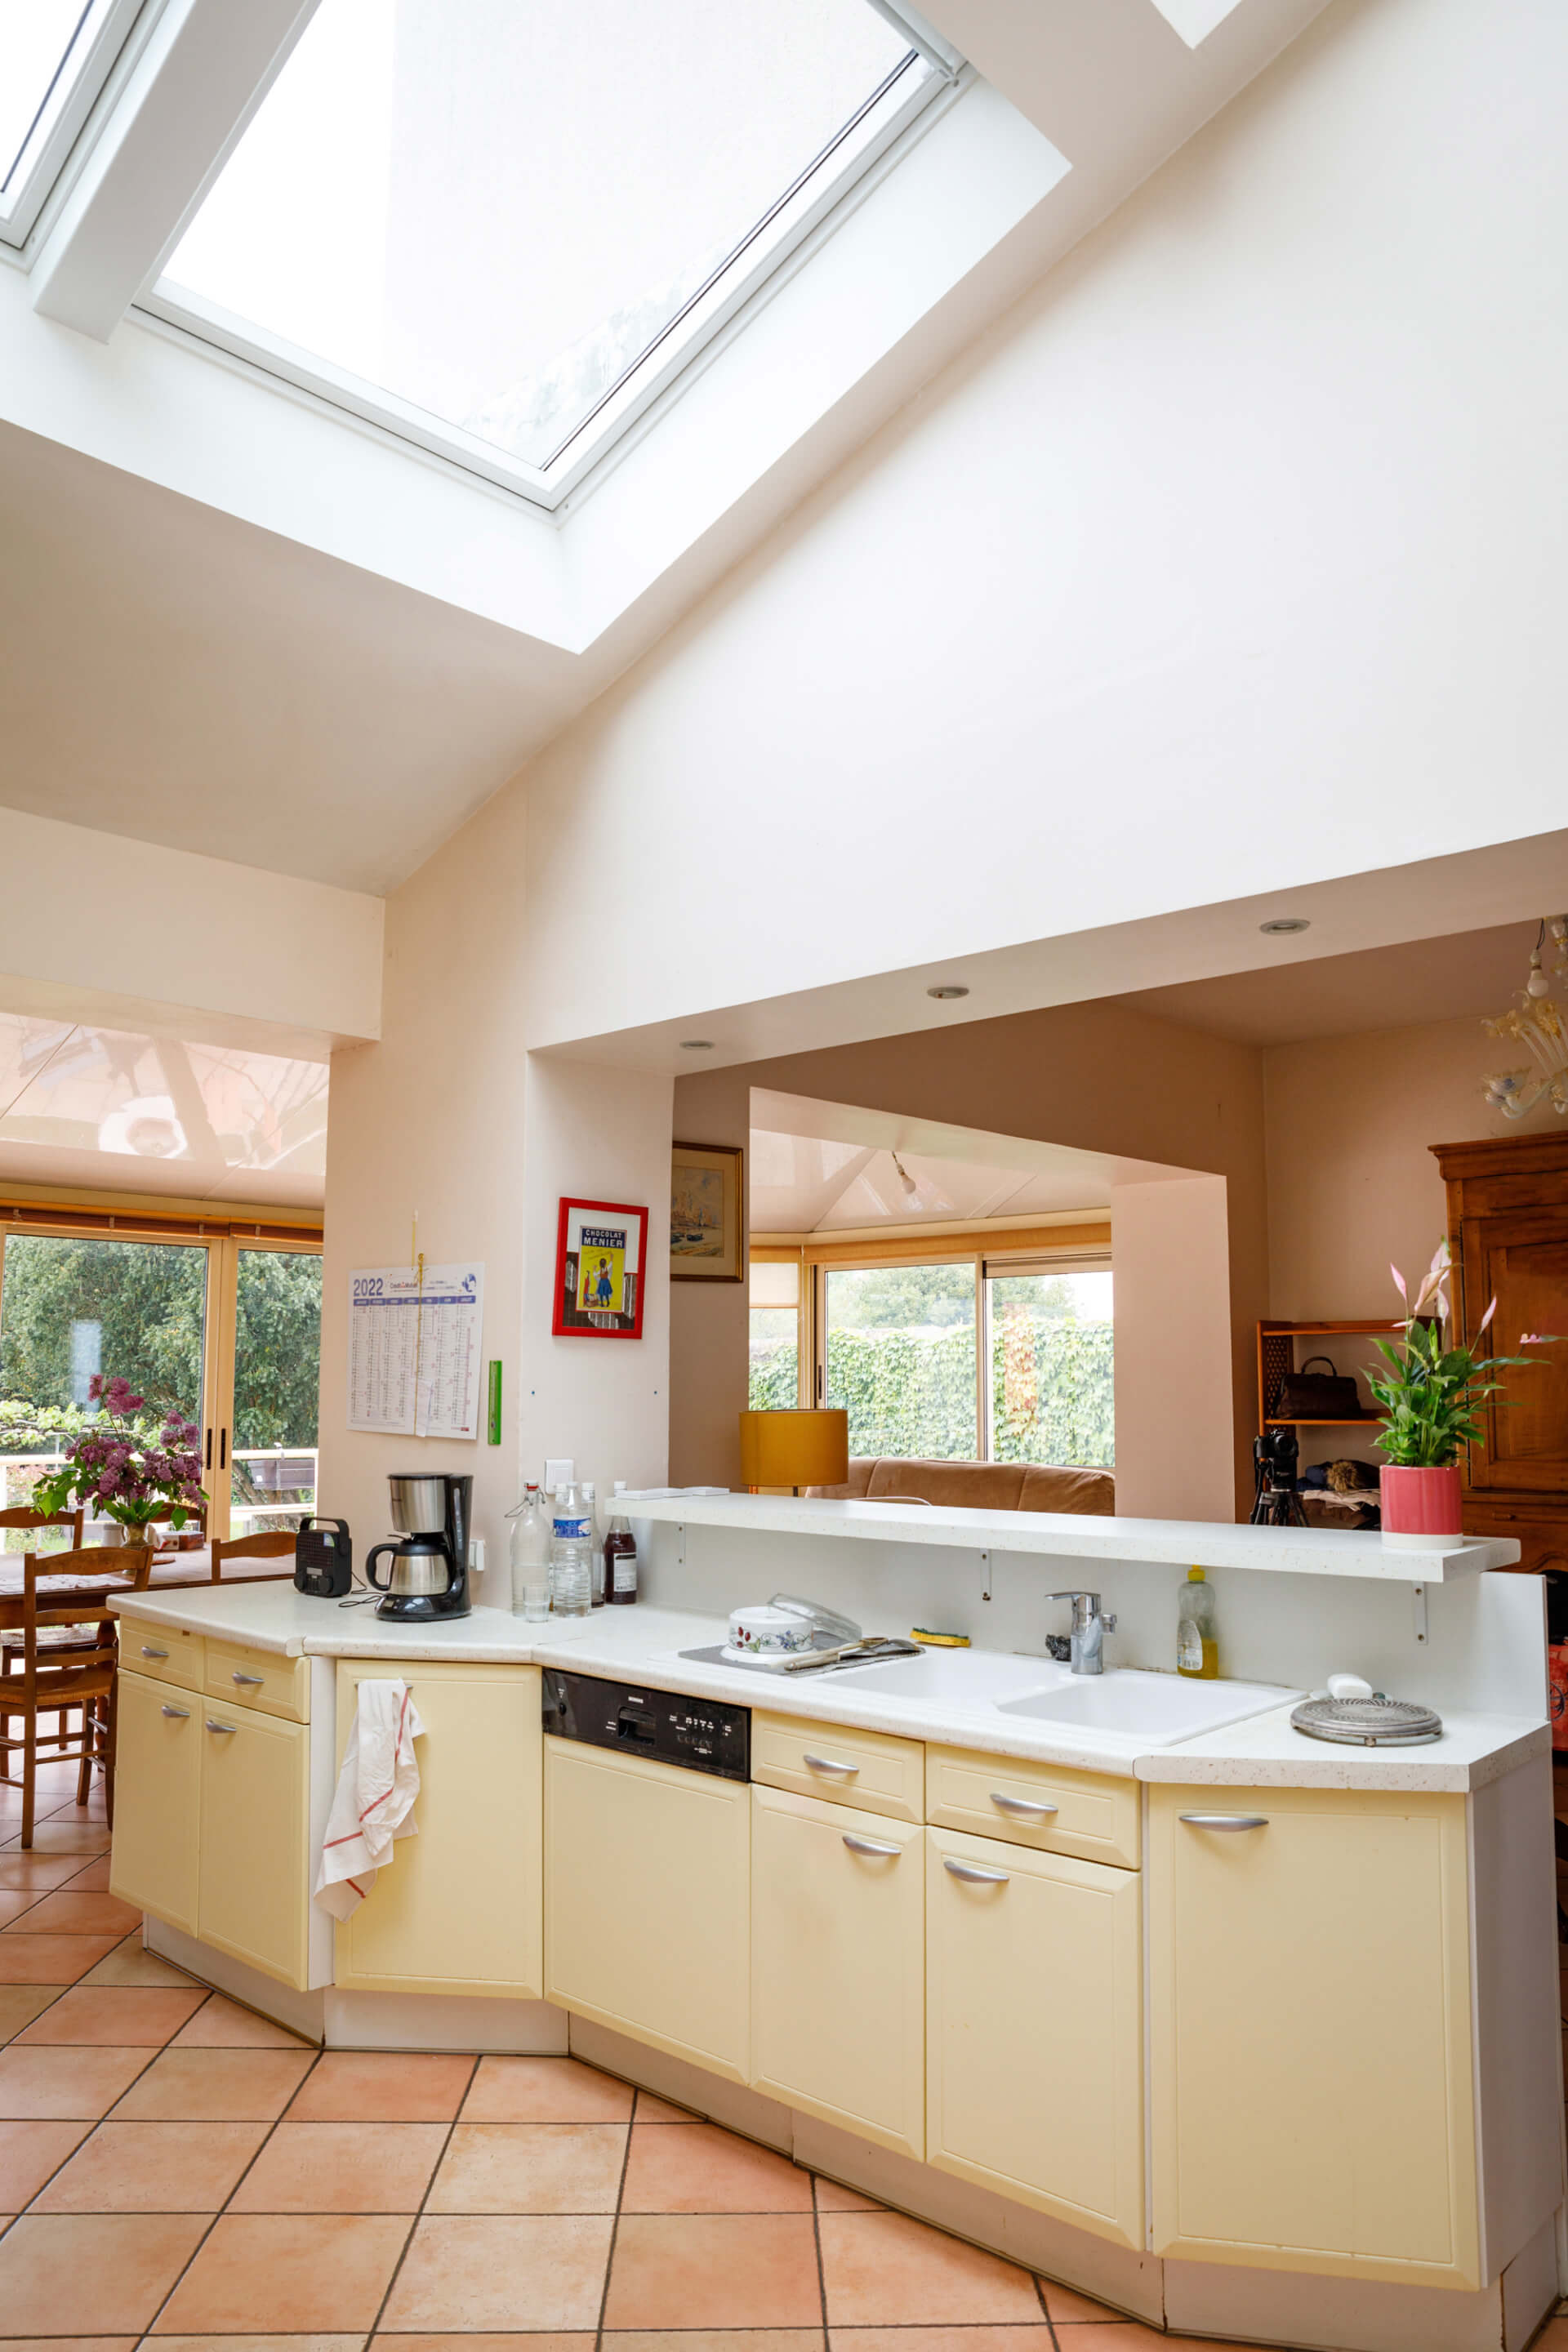 Bright kitchen interior with roof windows